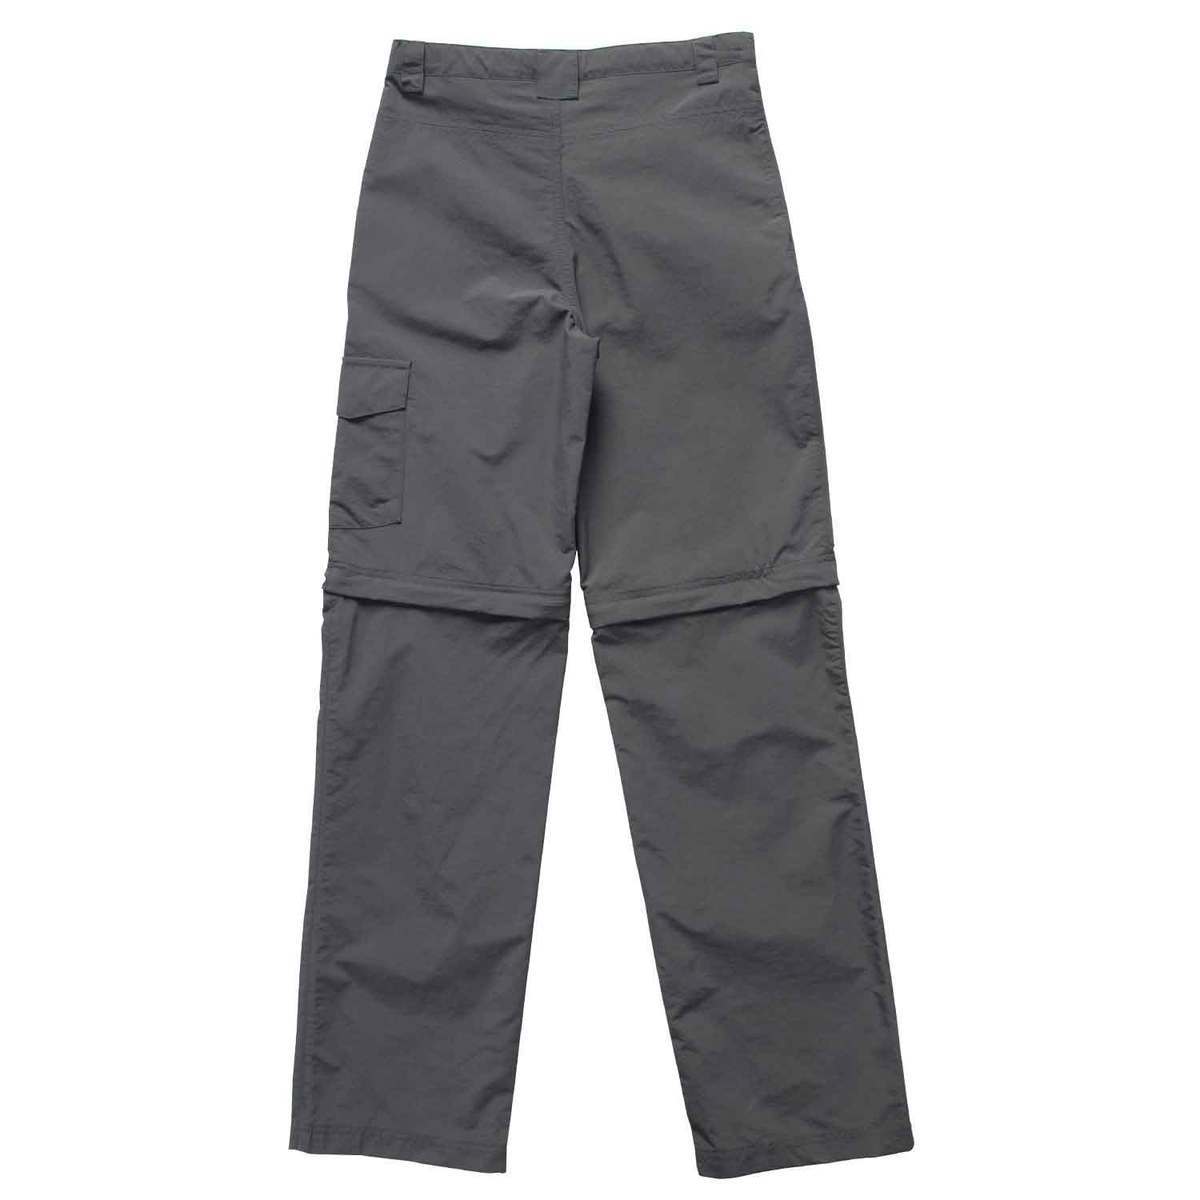 Rustic Ridge Boys' Quest Zip Off Pants - Charcoal - S - Charcoal S ...